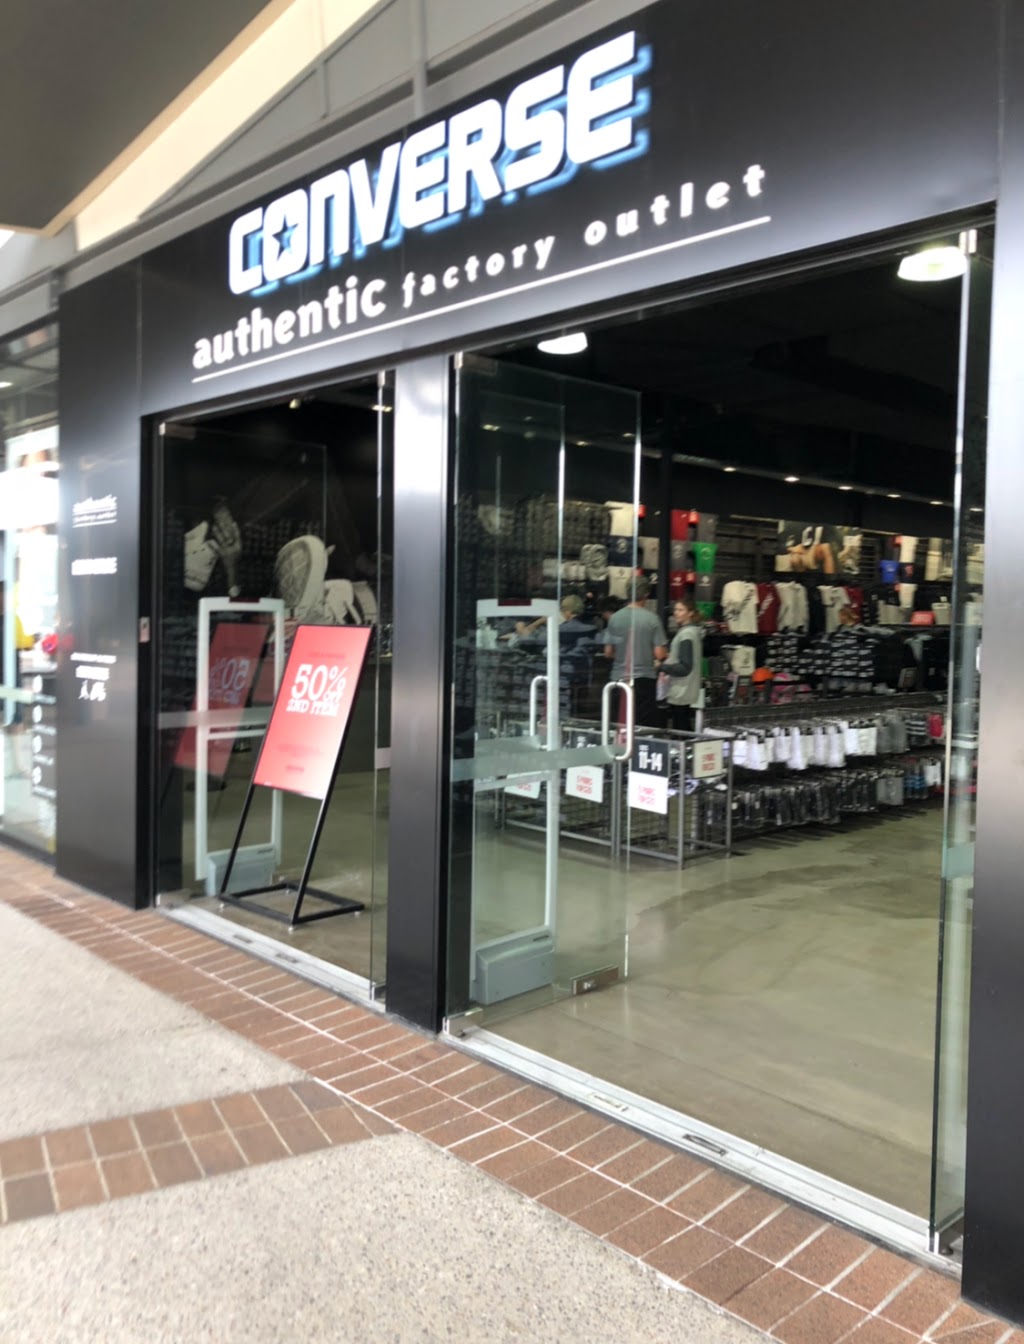 Converse - Shoe store | Biggera Waters QLD 4216, Australia